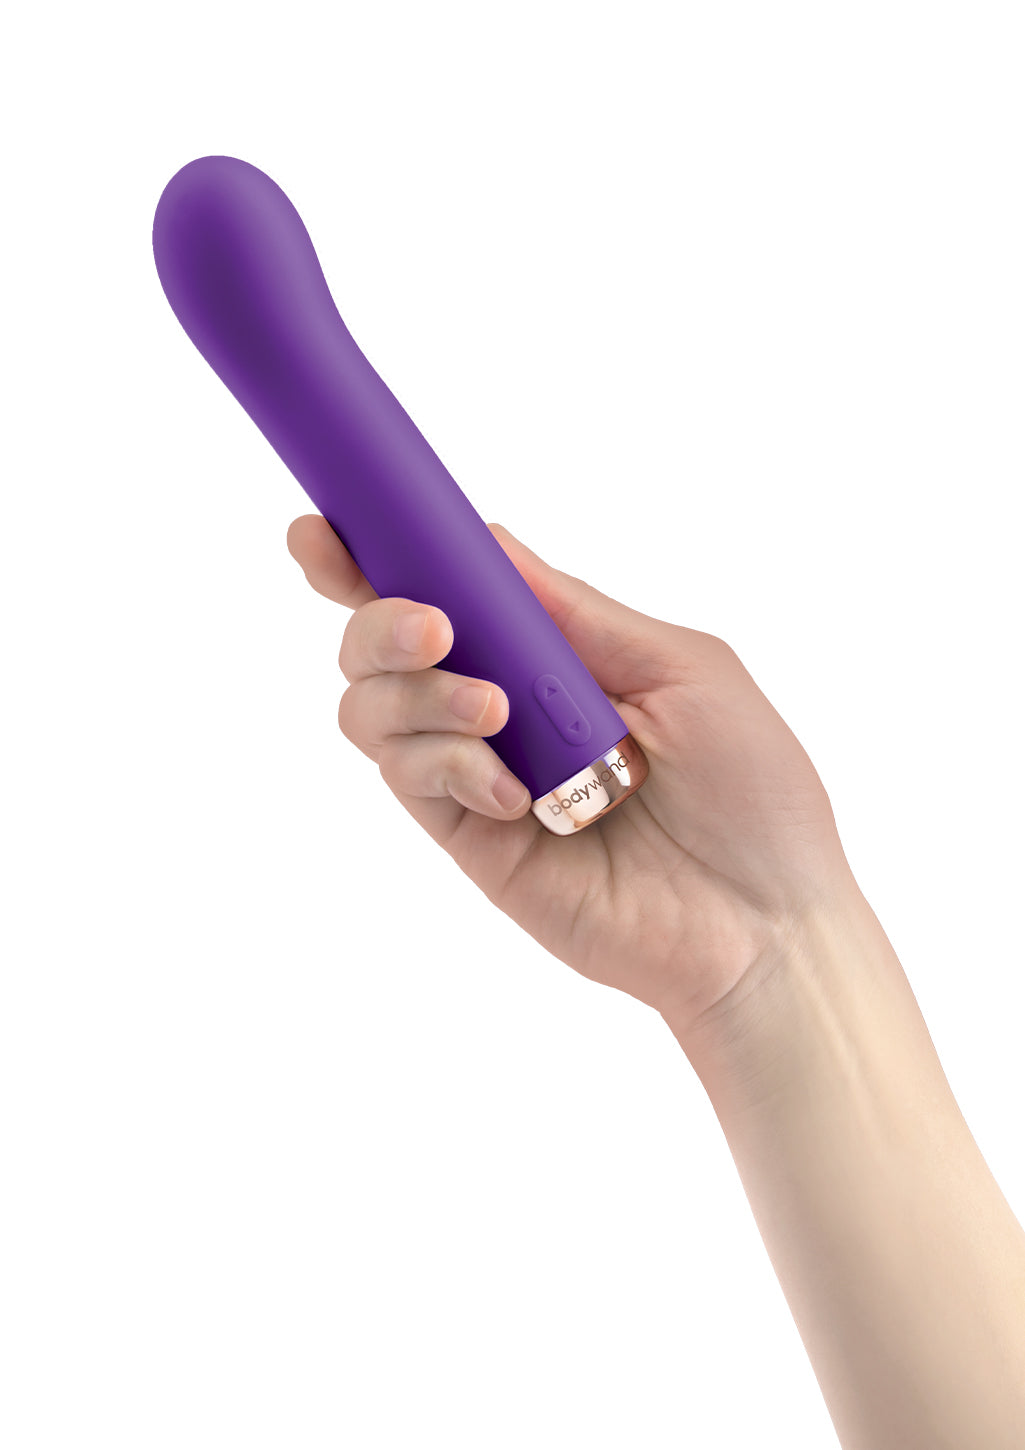 hand holding My first g-spot vibrator (purple)